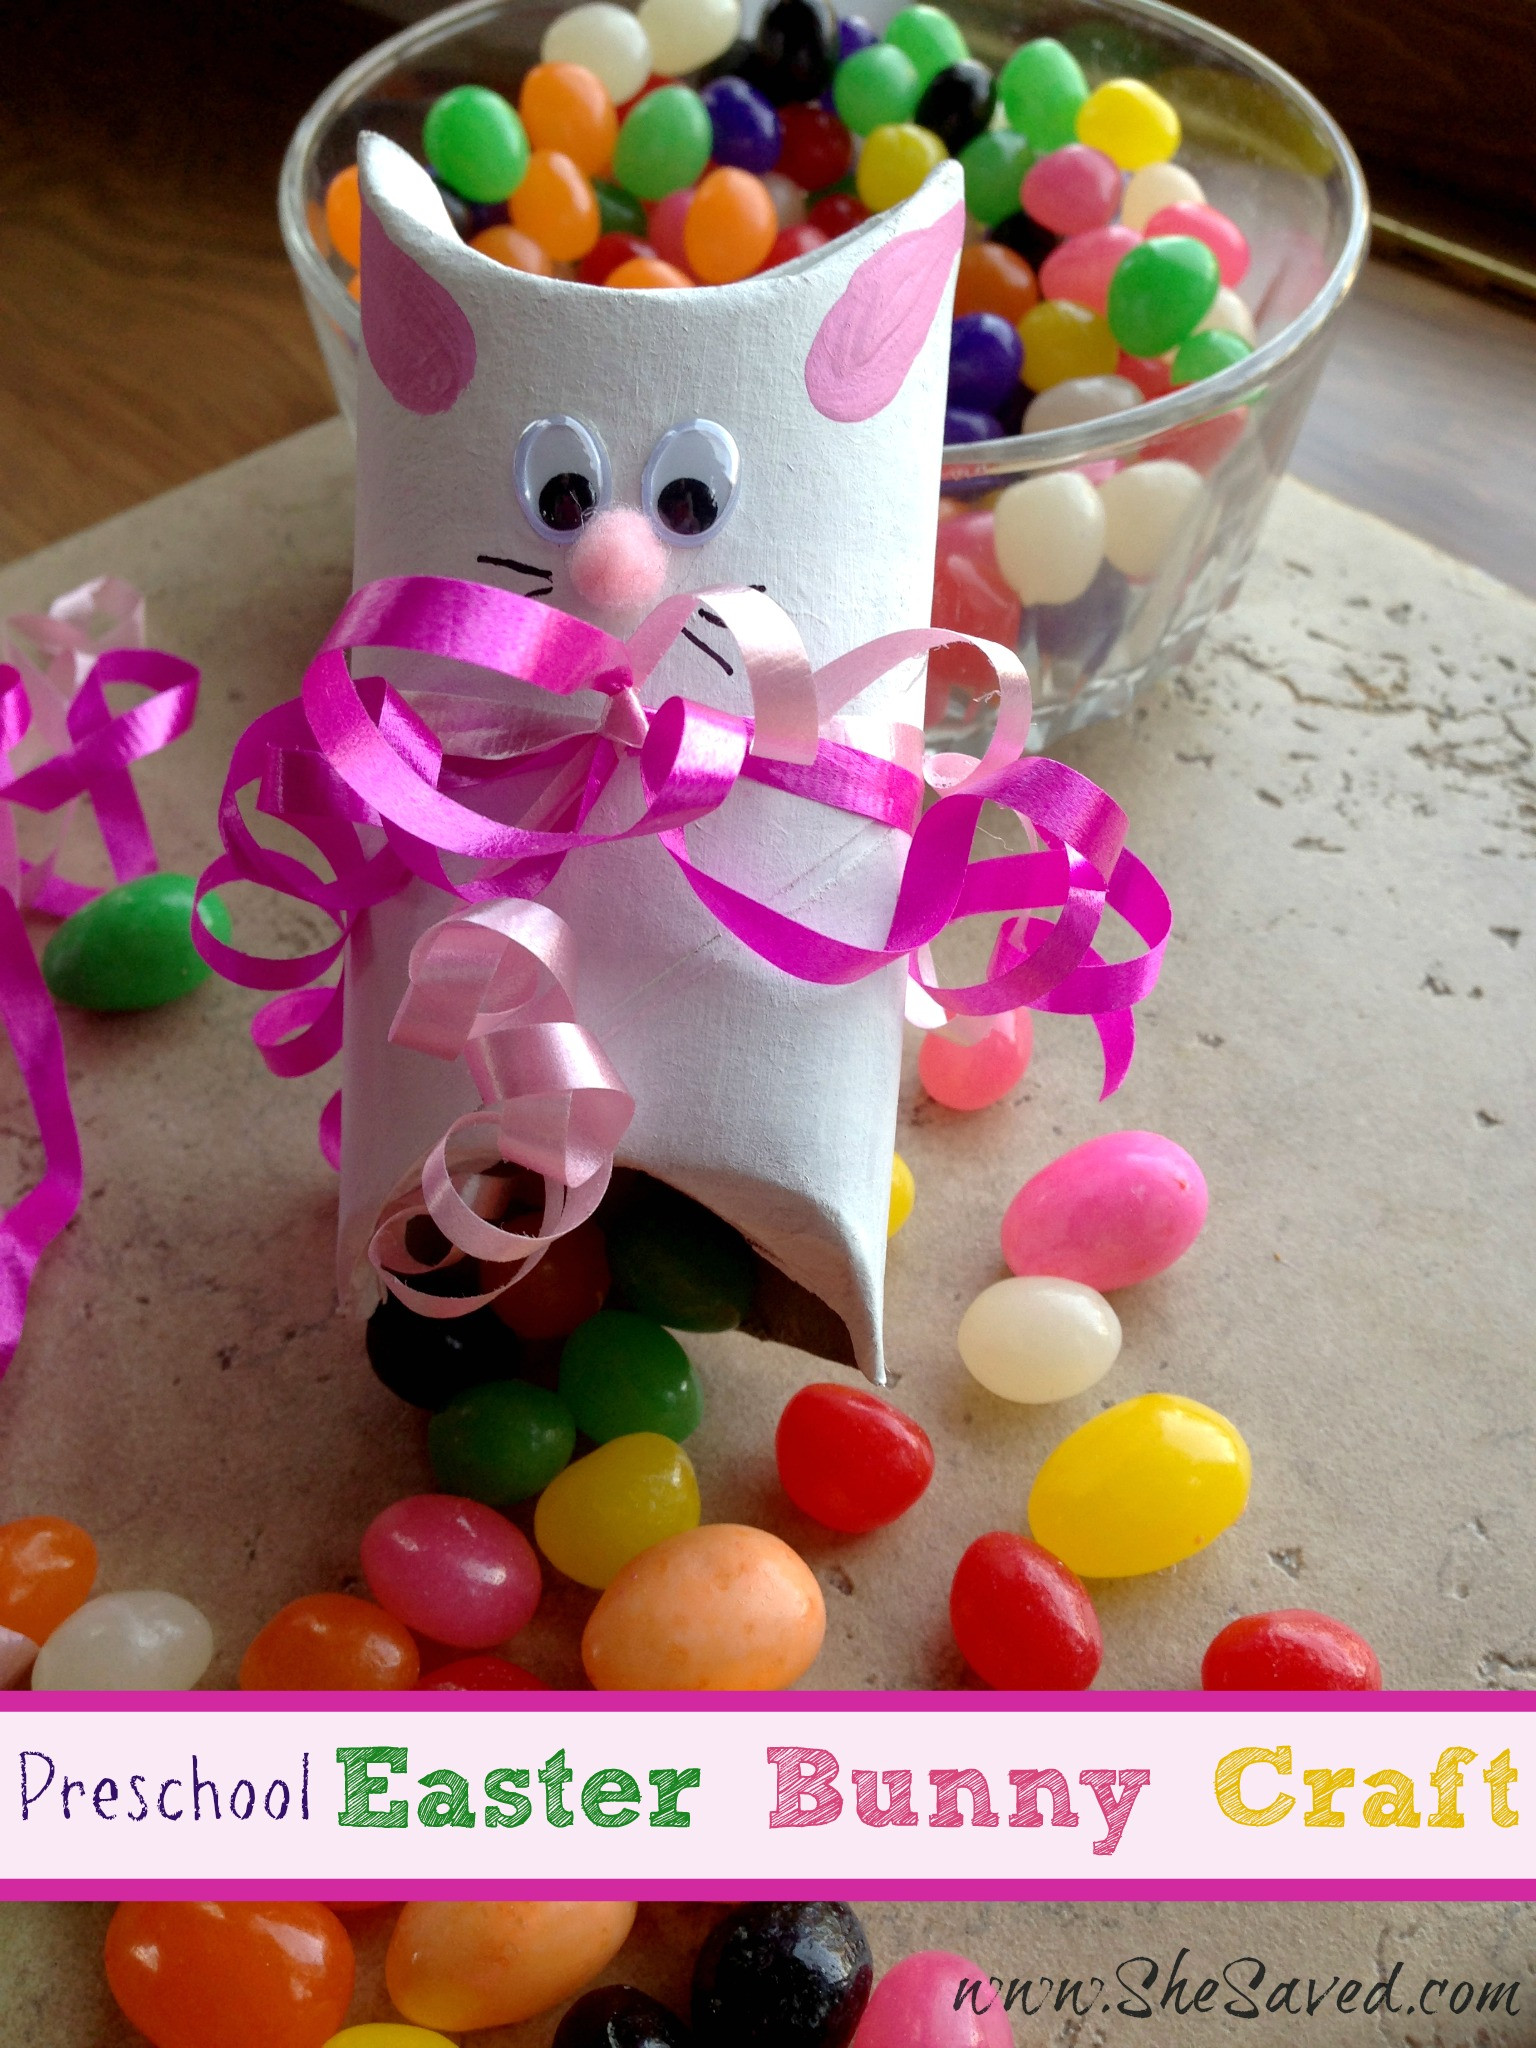 Preschool Easter Party Ideas
 Preschool Easter Bunny Crafts SheSaved